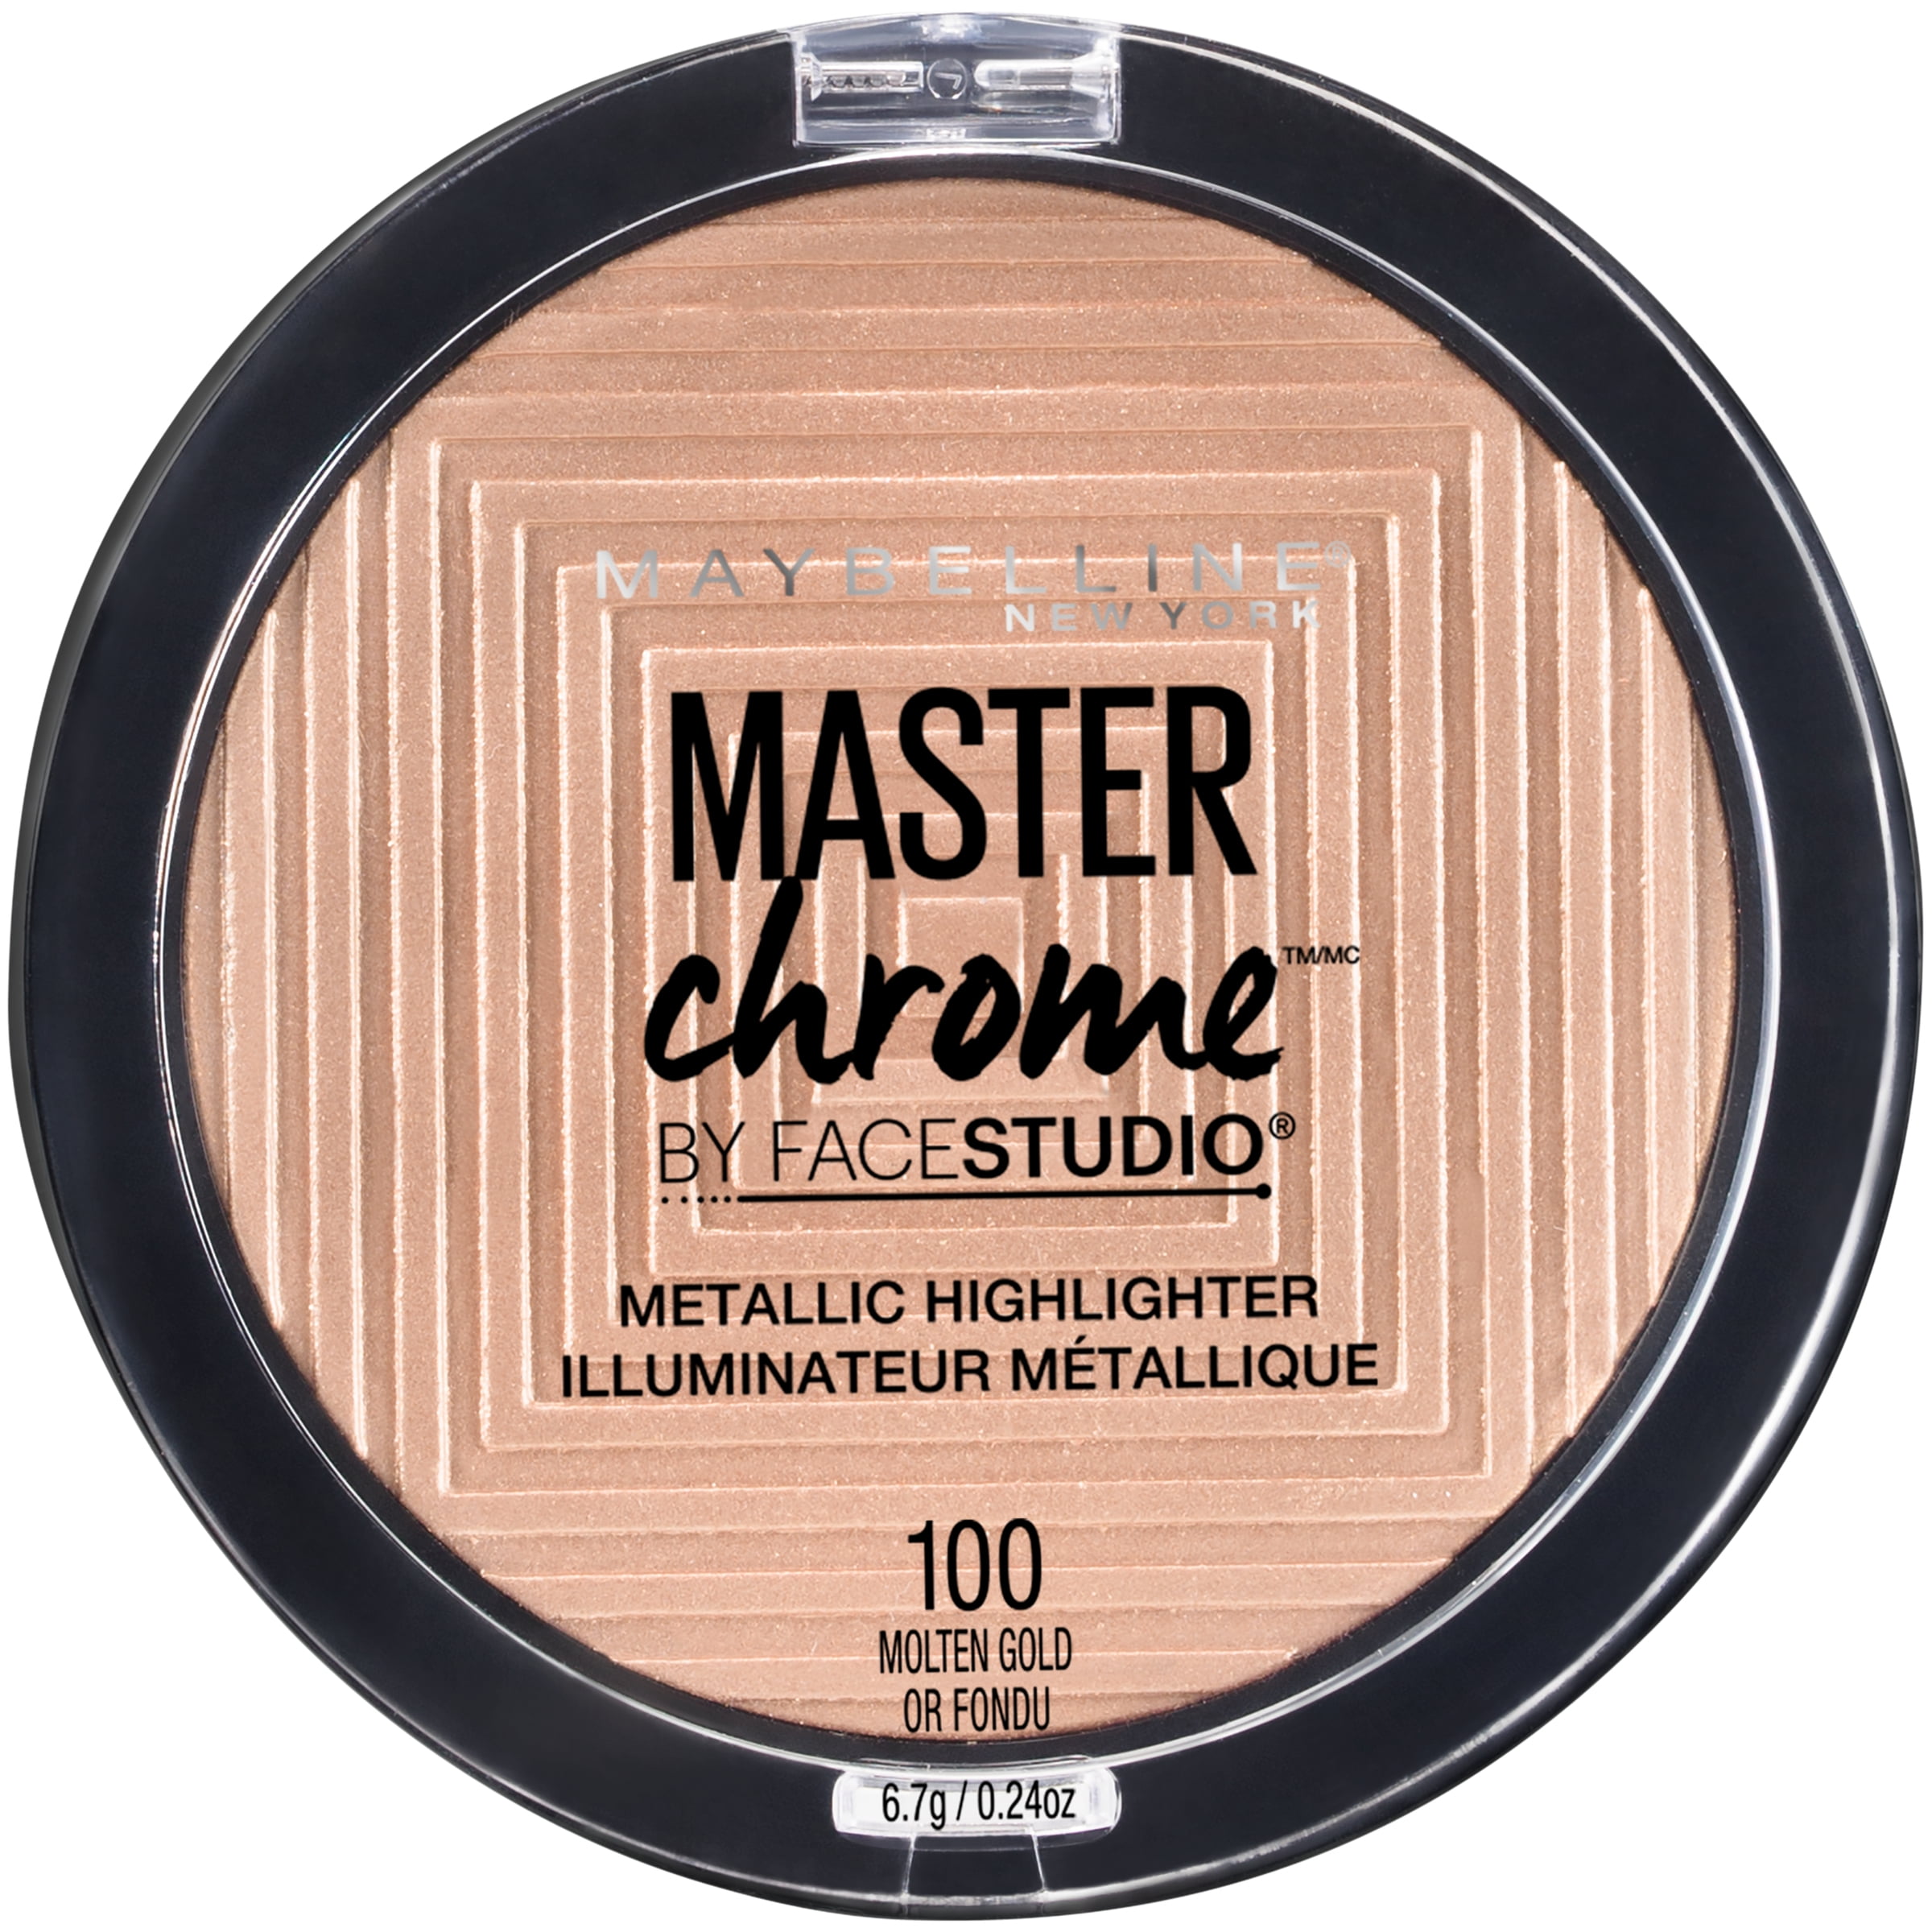 Maybelline Facestudio Master Chrome Metallic Highlighter Makeup, Molten Gold, 0.24 oz